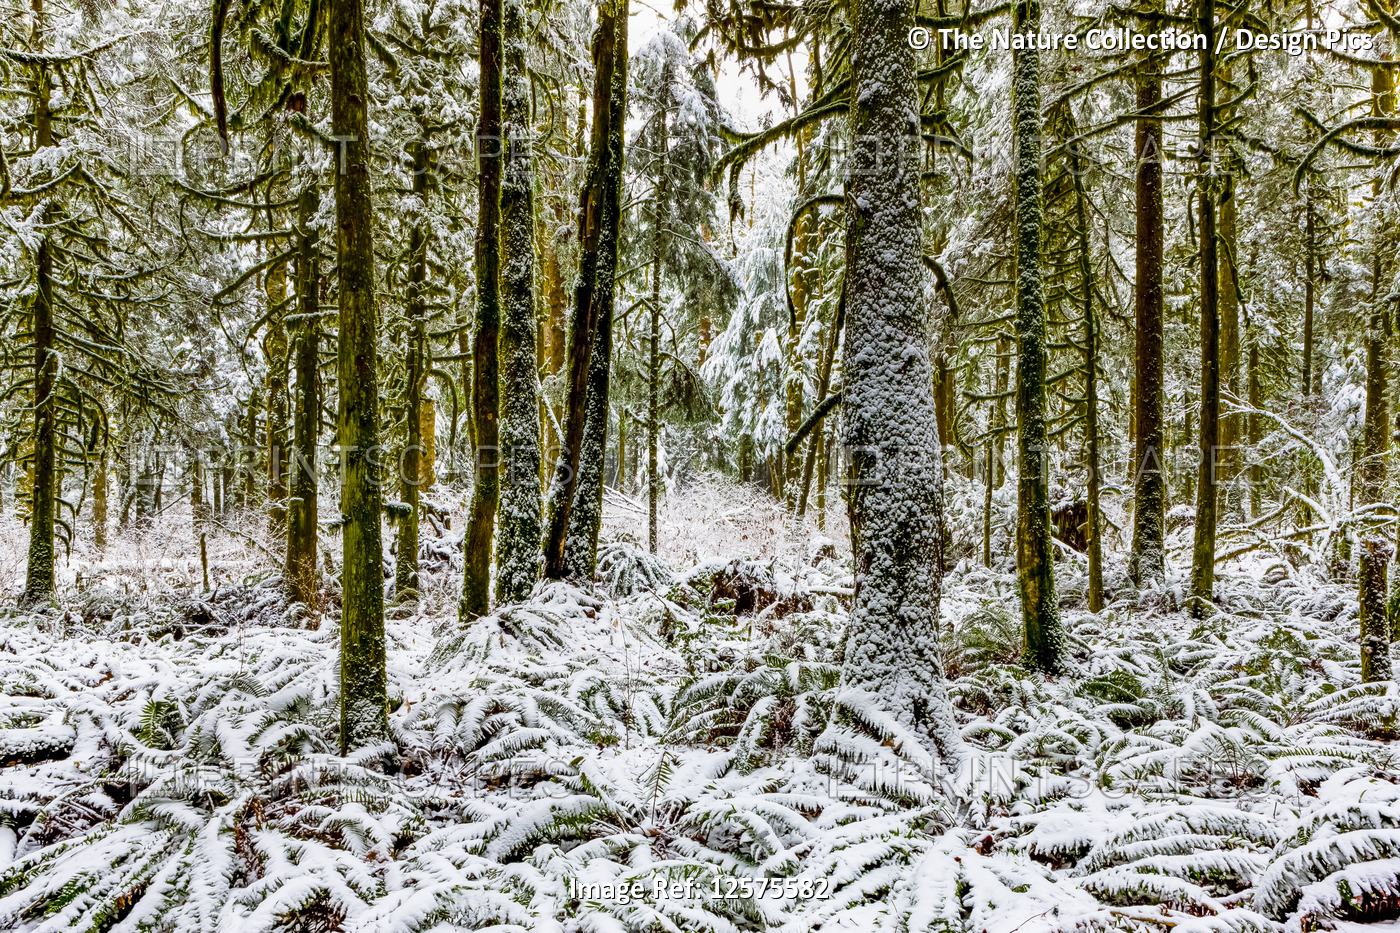 Snow covering a rainforest; British Columbia, Canada